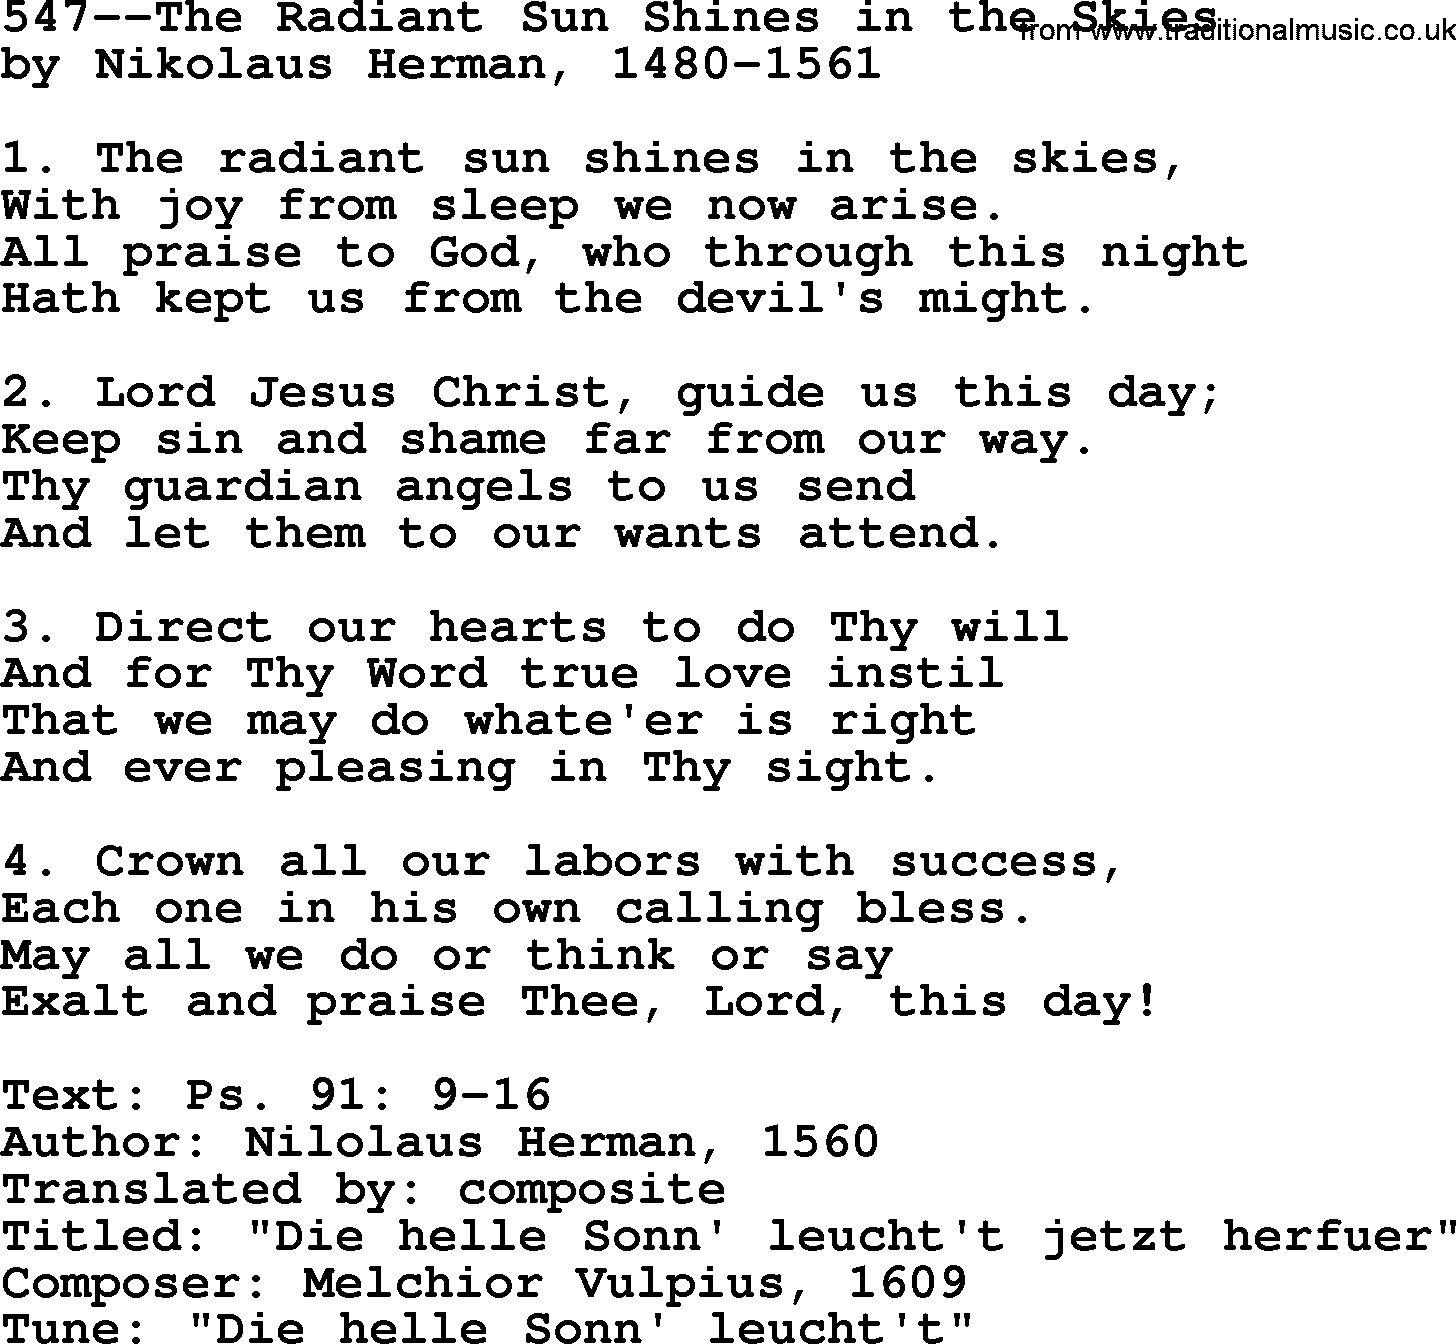 Lutheran Hymn: 547--The Radiant Sun Shines in the Skies.txt lyrics with PDF